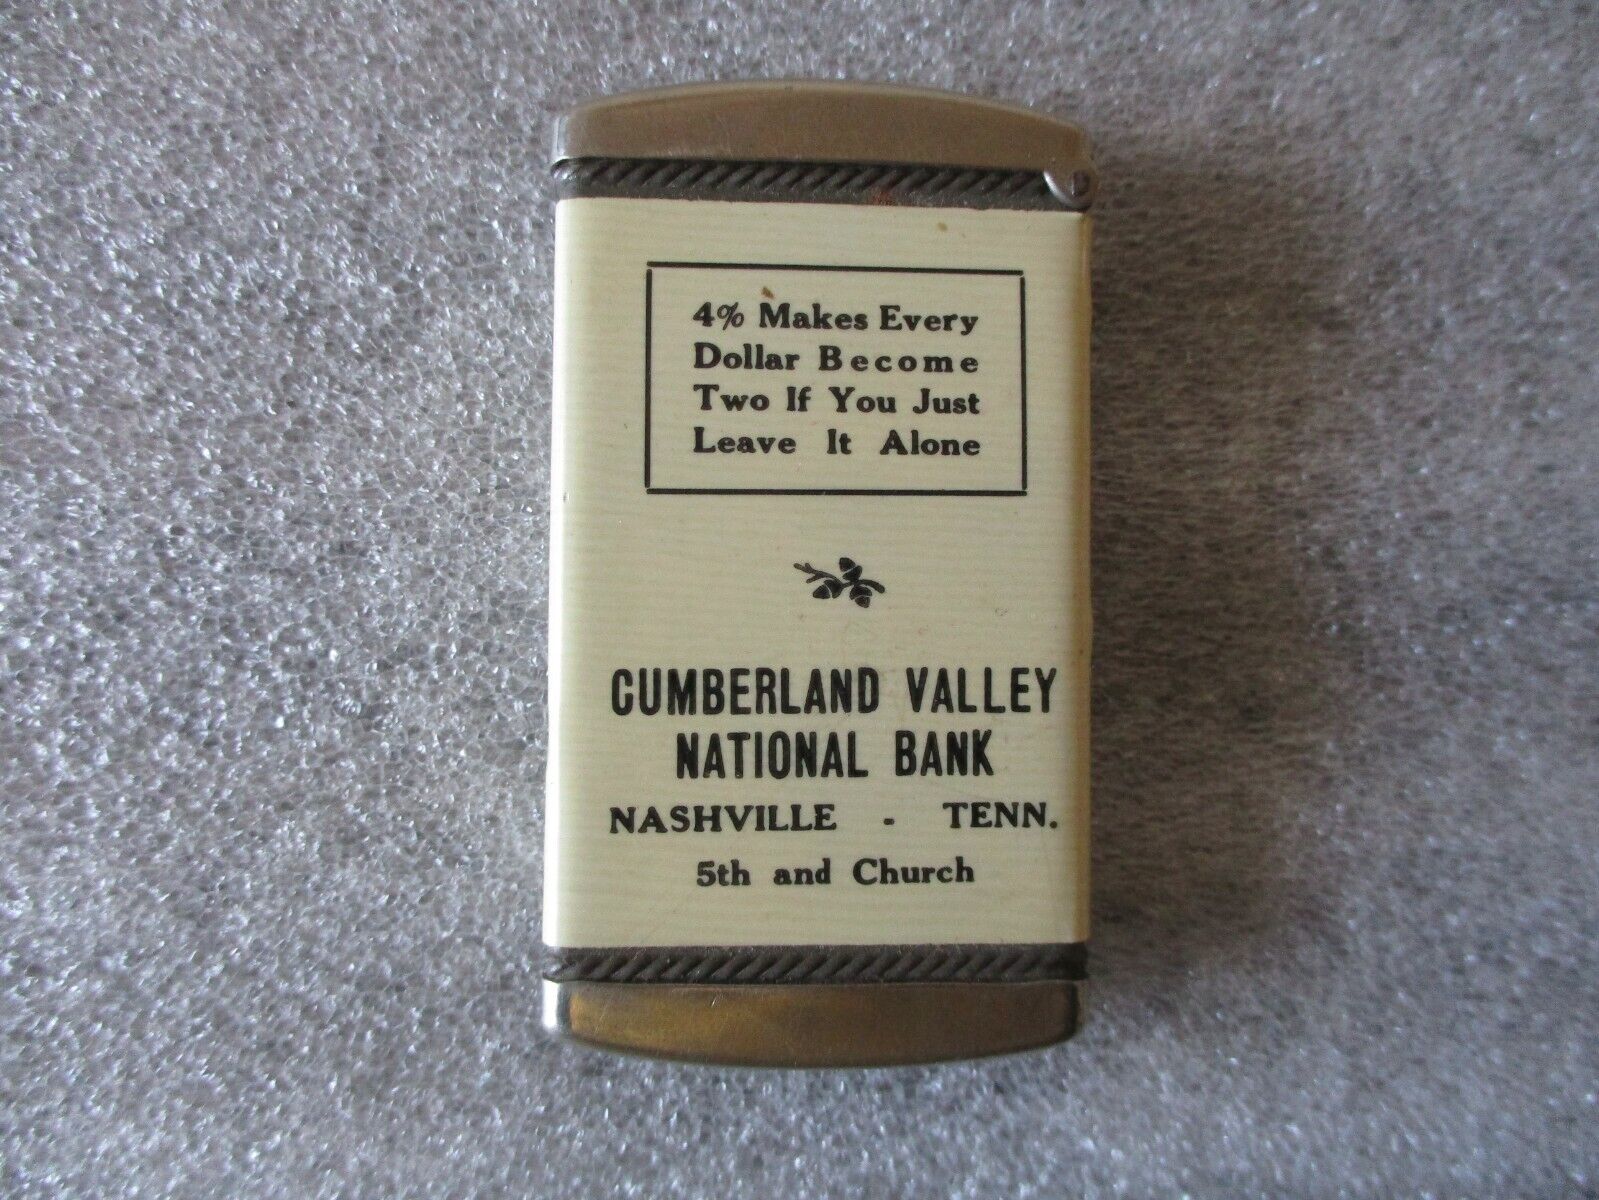 VINTAGE DIME BANK METAL CUMBERLAND VALLEY NATIONAL BANK - BANK HOLDS $2.00